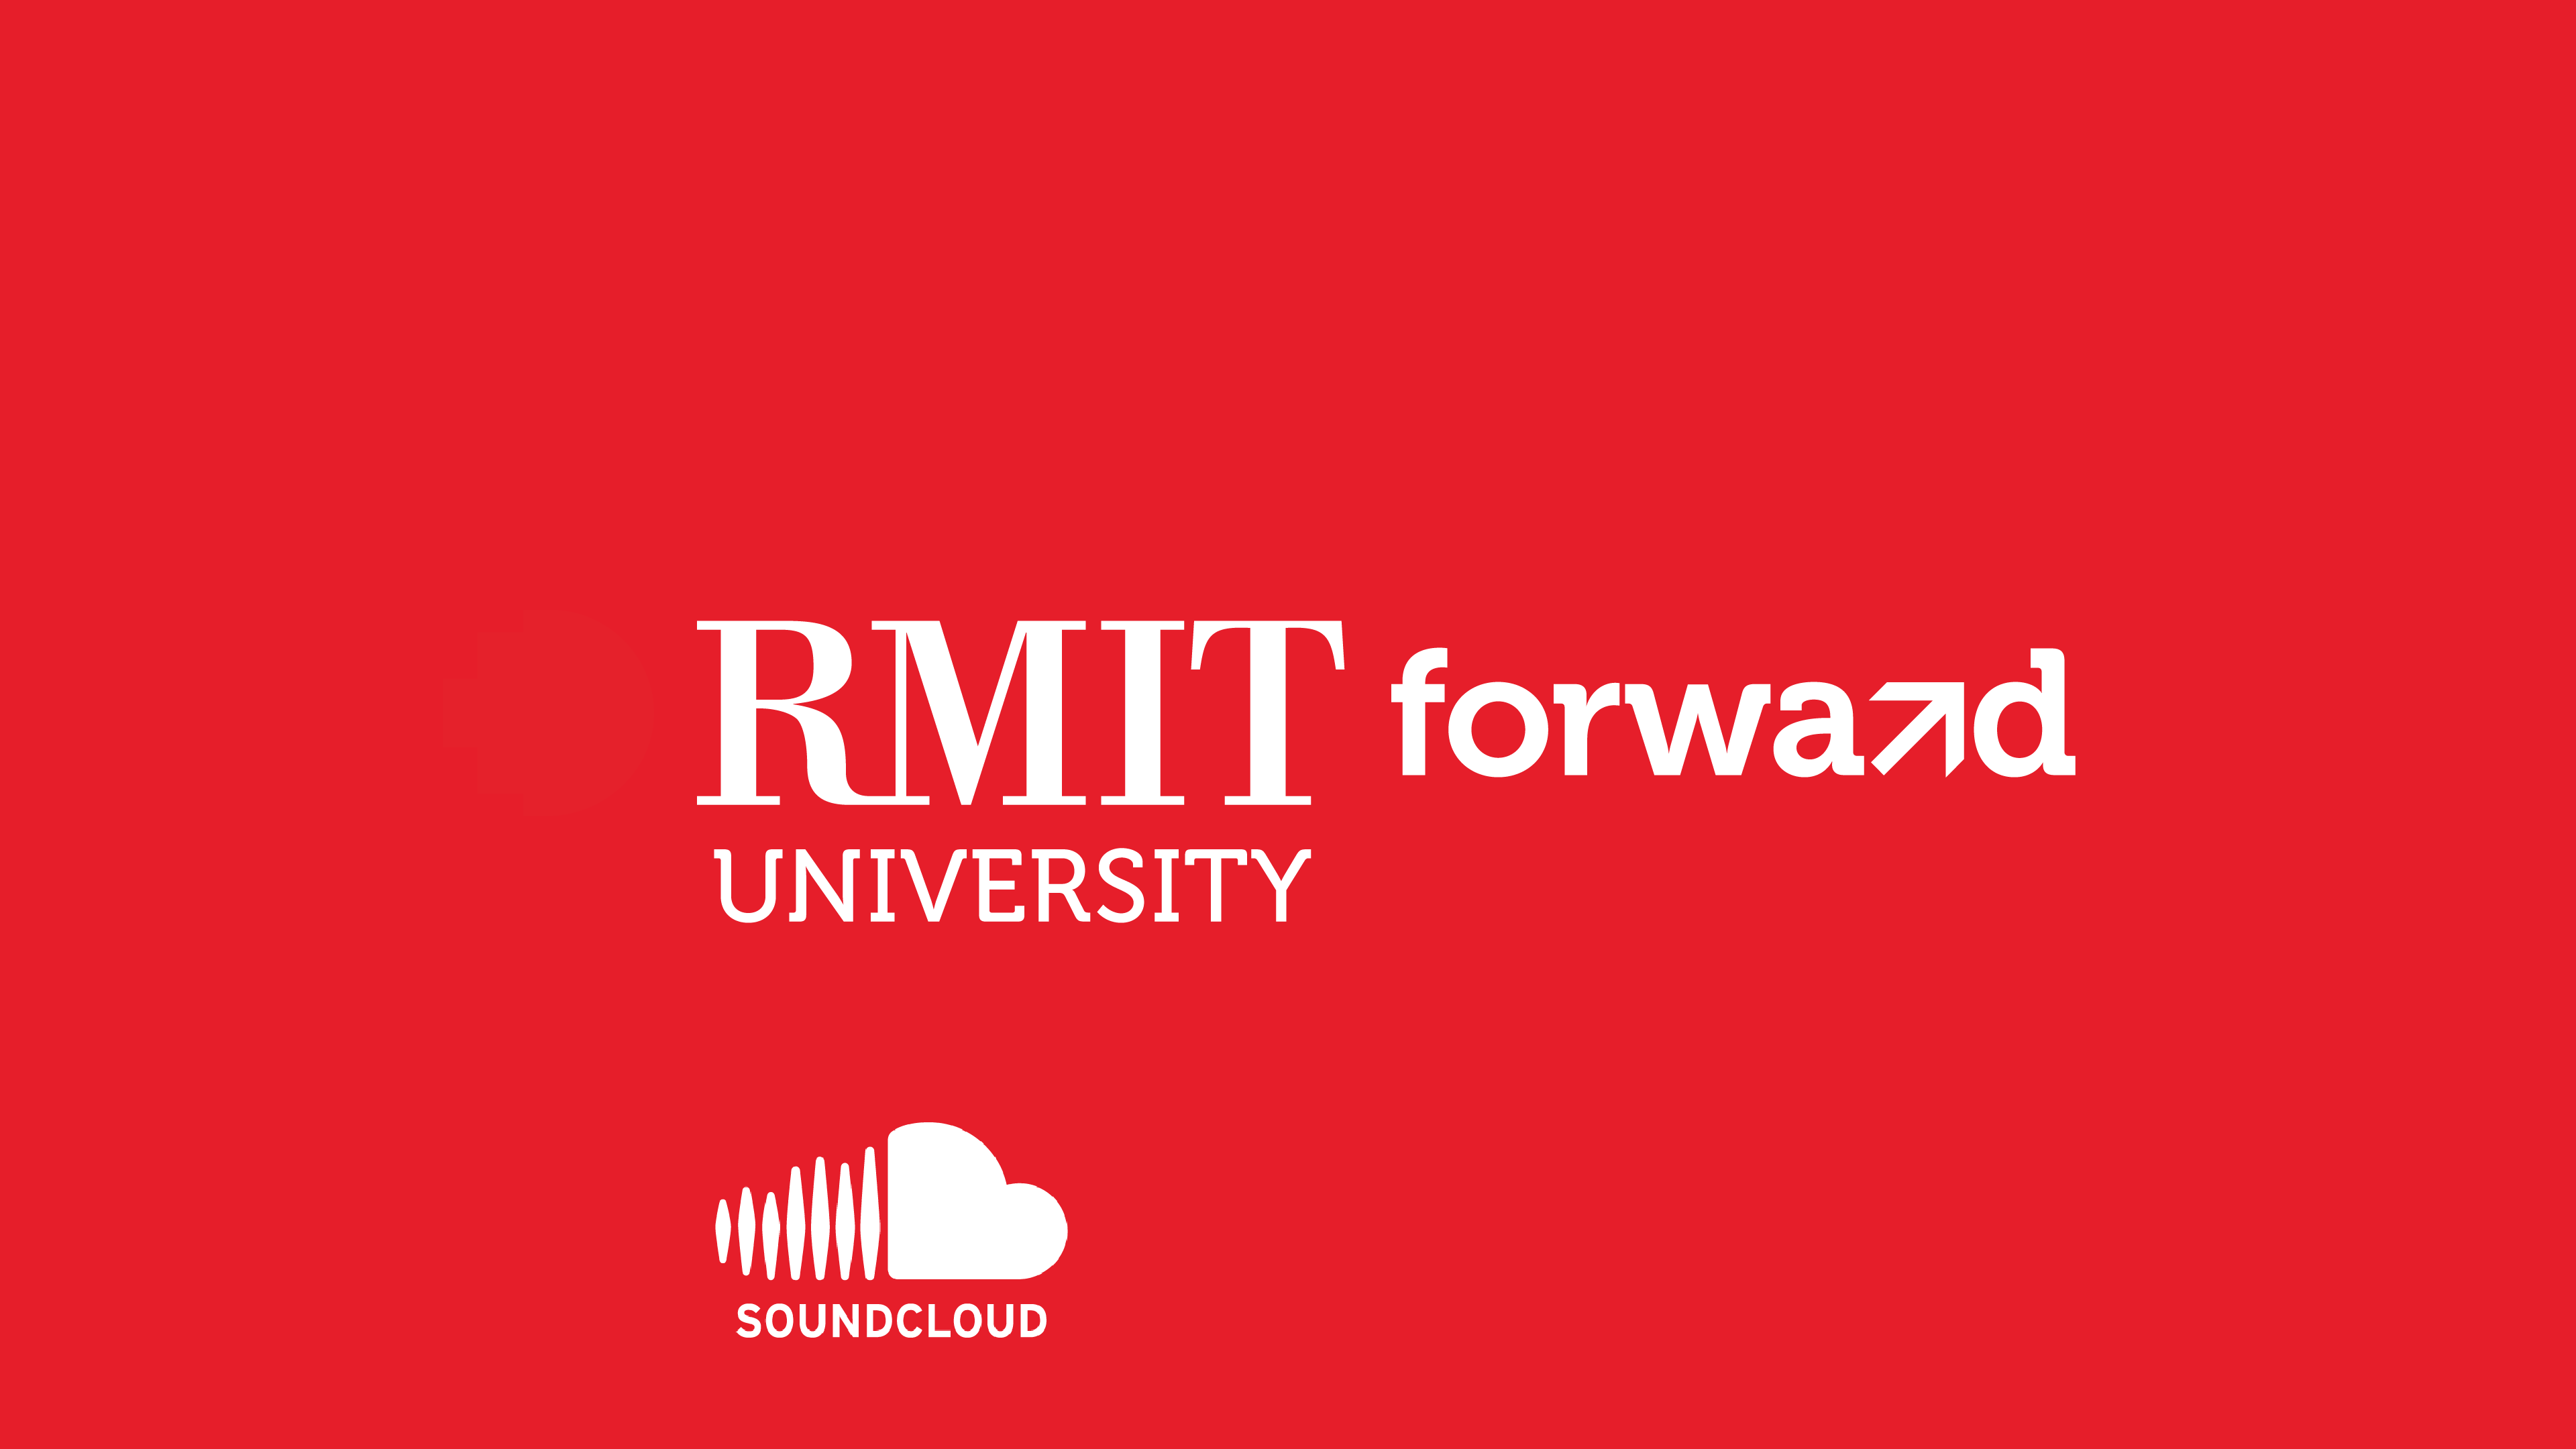 RMIT University Forward  Soundcloud logo